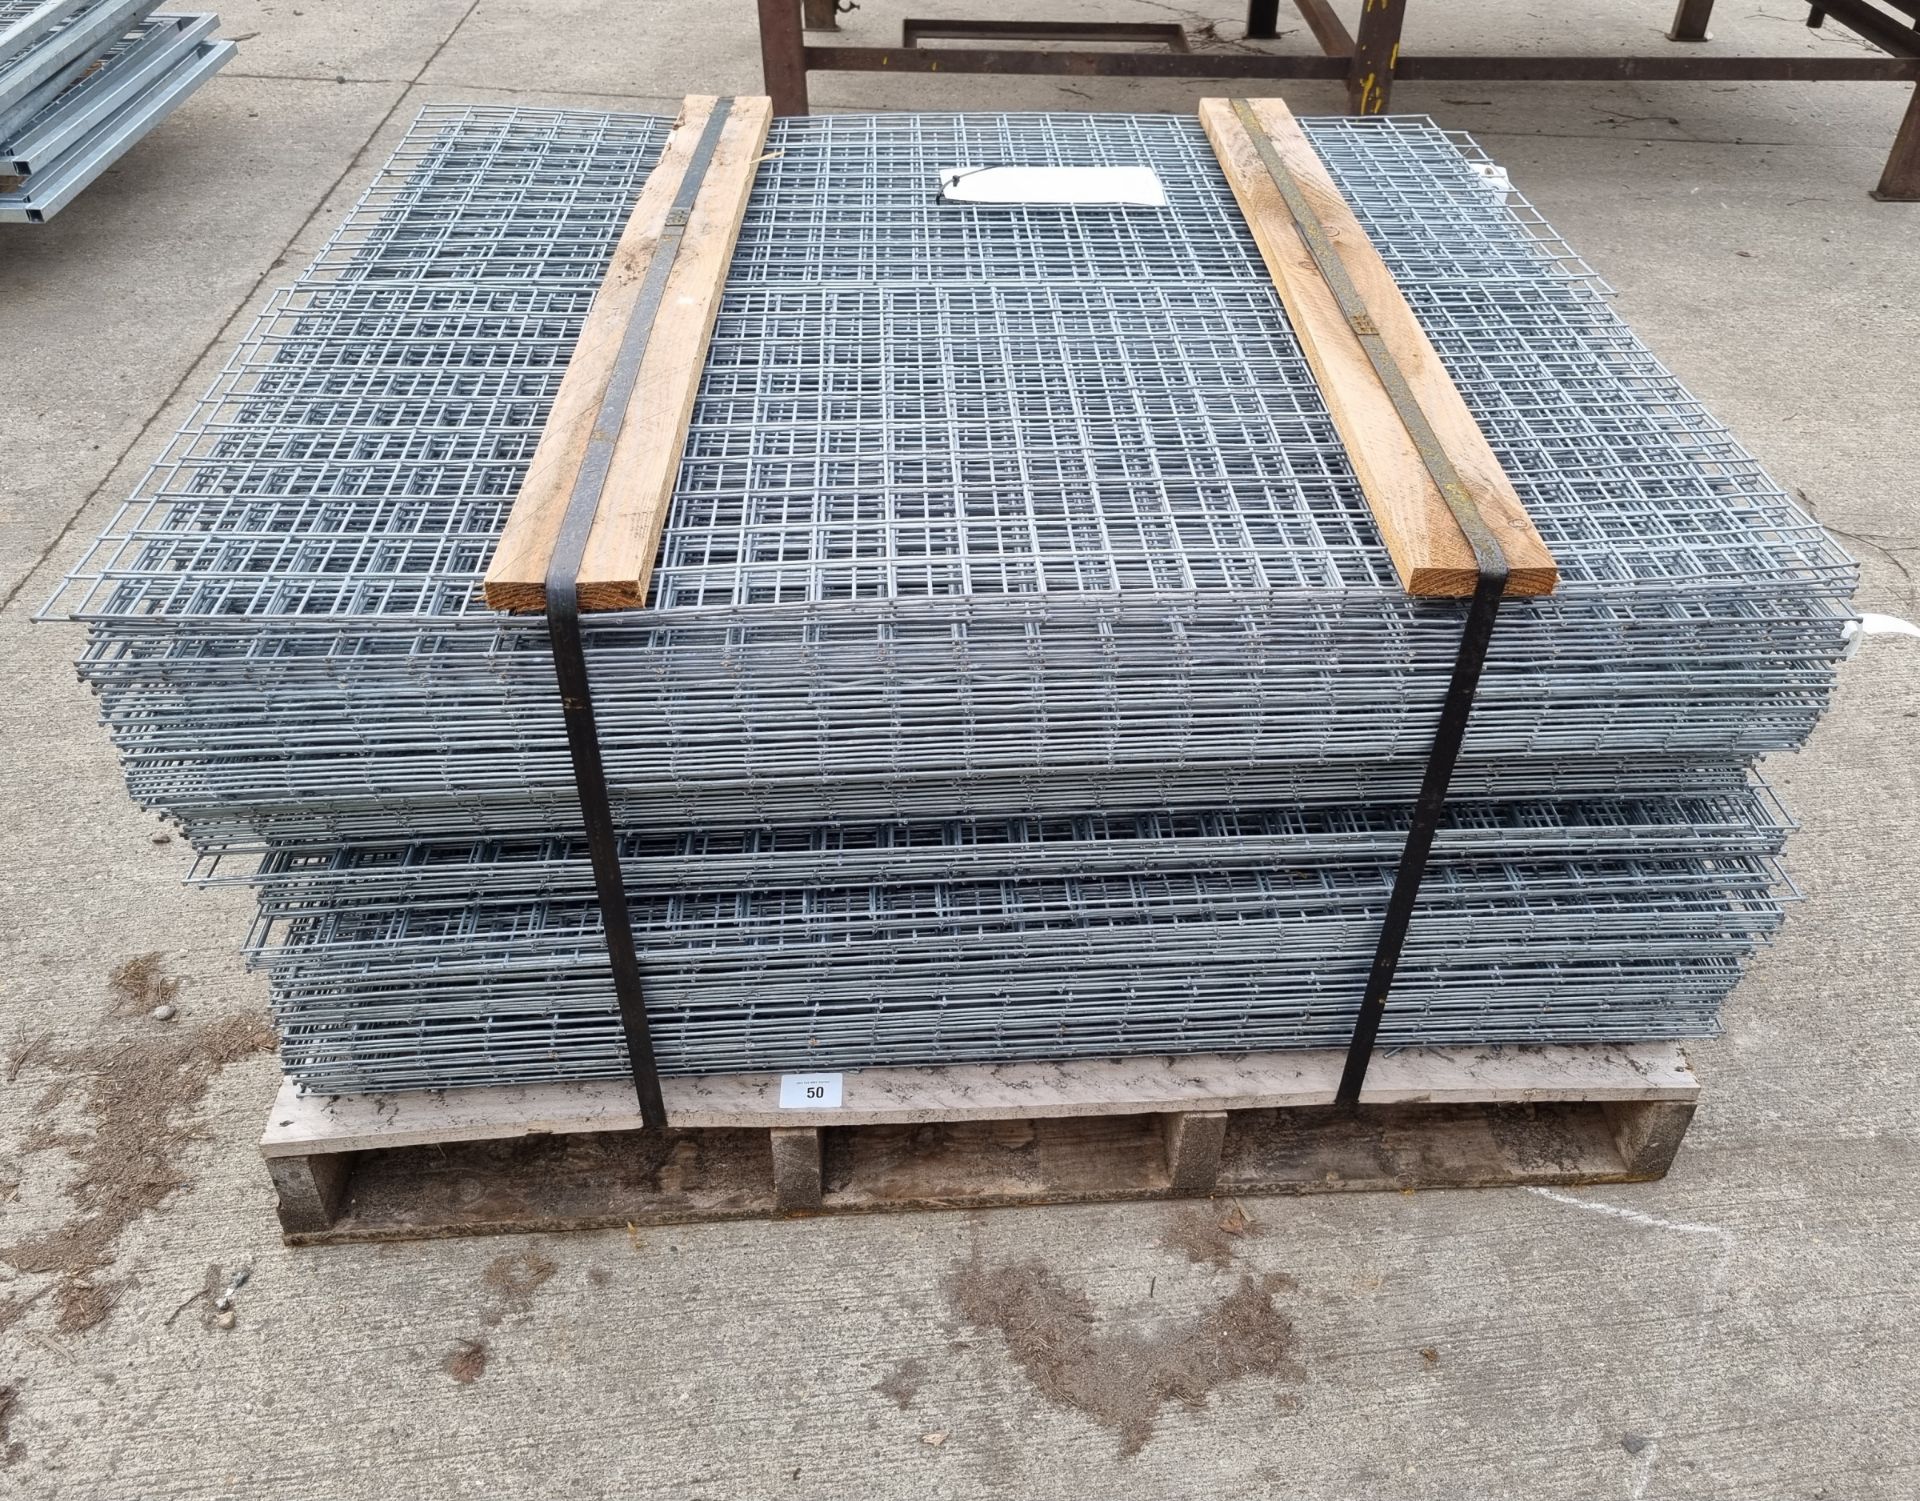 Approximately 188x Steel wire mesh assemblies - L 117 x W 51cm